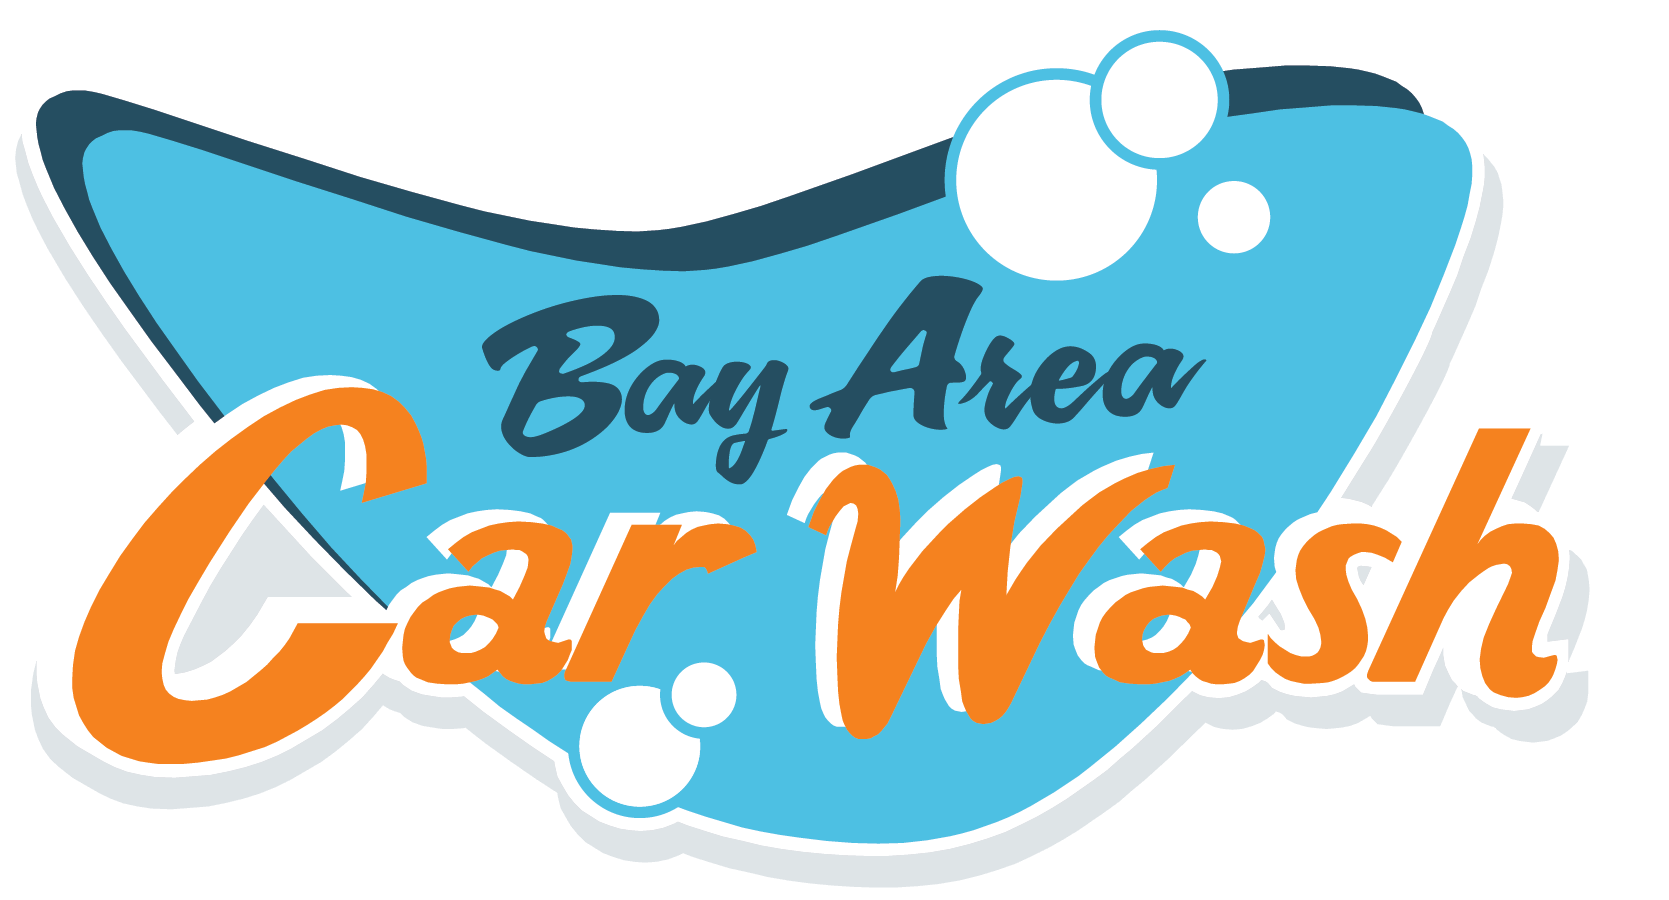 BAY AREA CAR WASH IN SAN FRANCISO FULL SERVICE CLEANING LOGO Bay Area Car Wash Logo blue and orange googie design logo